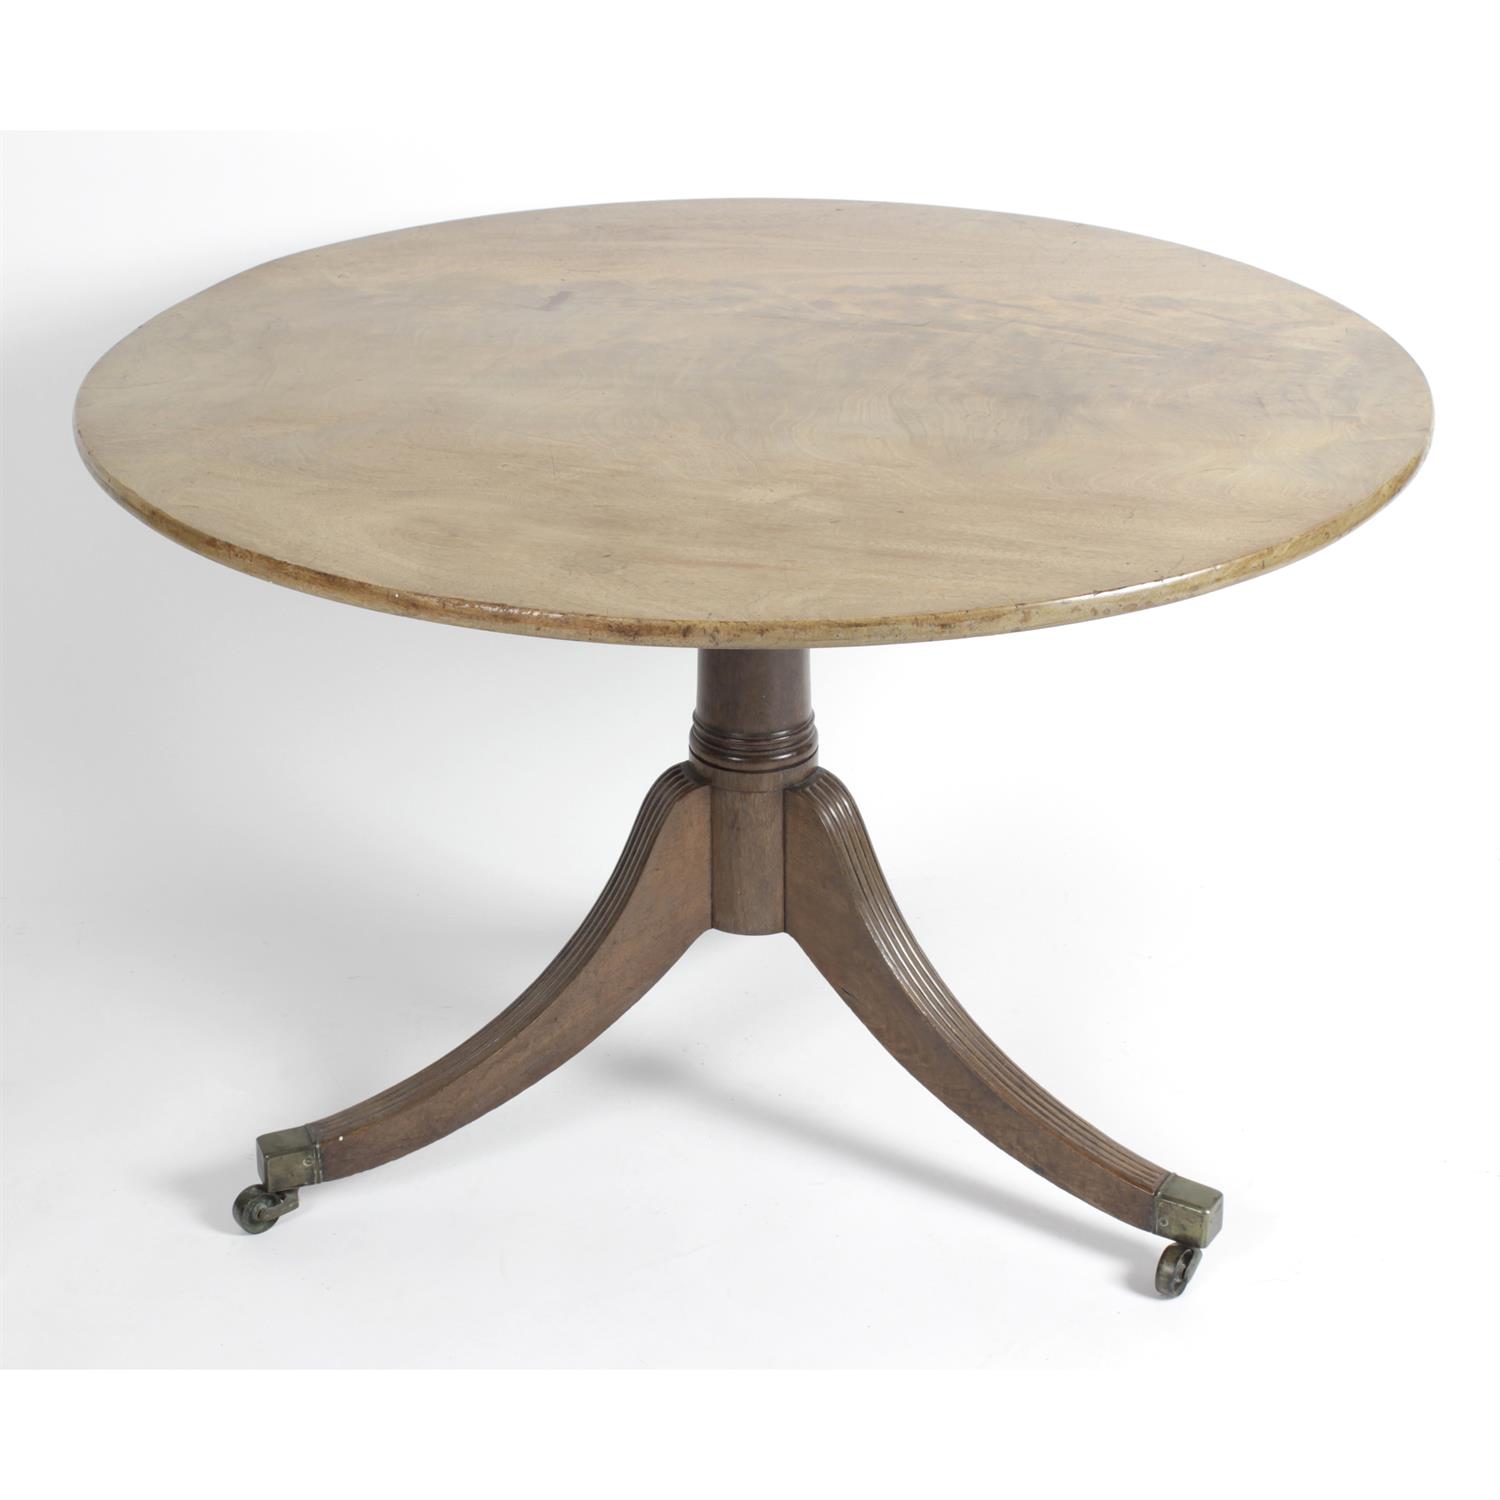 A 19th century mahogany circular topped, snap topped table.